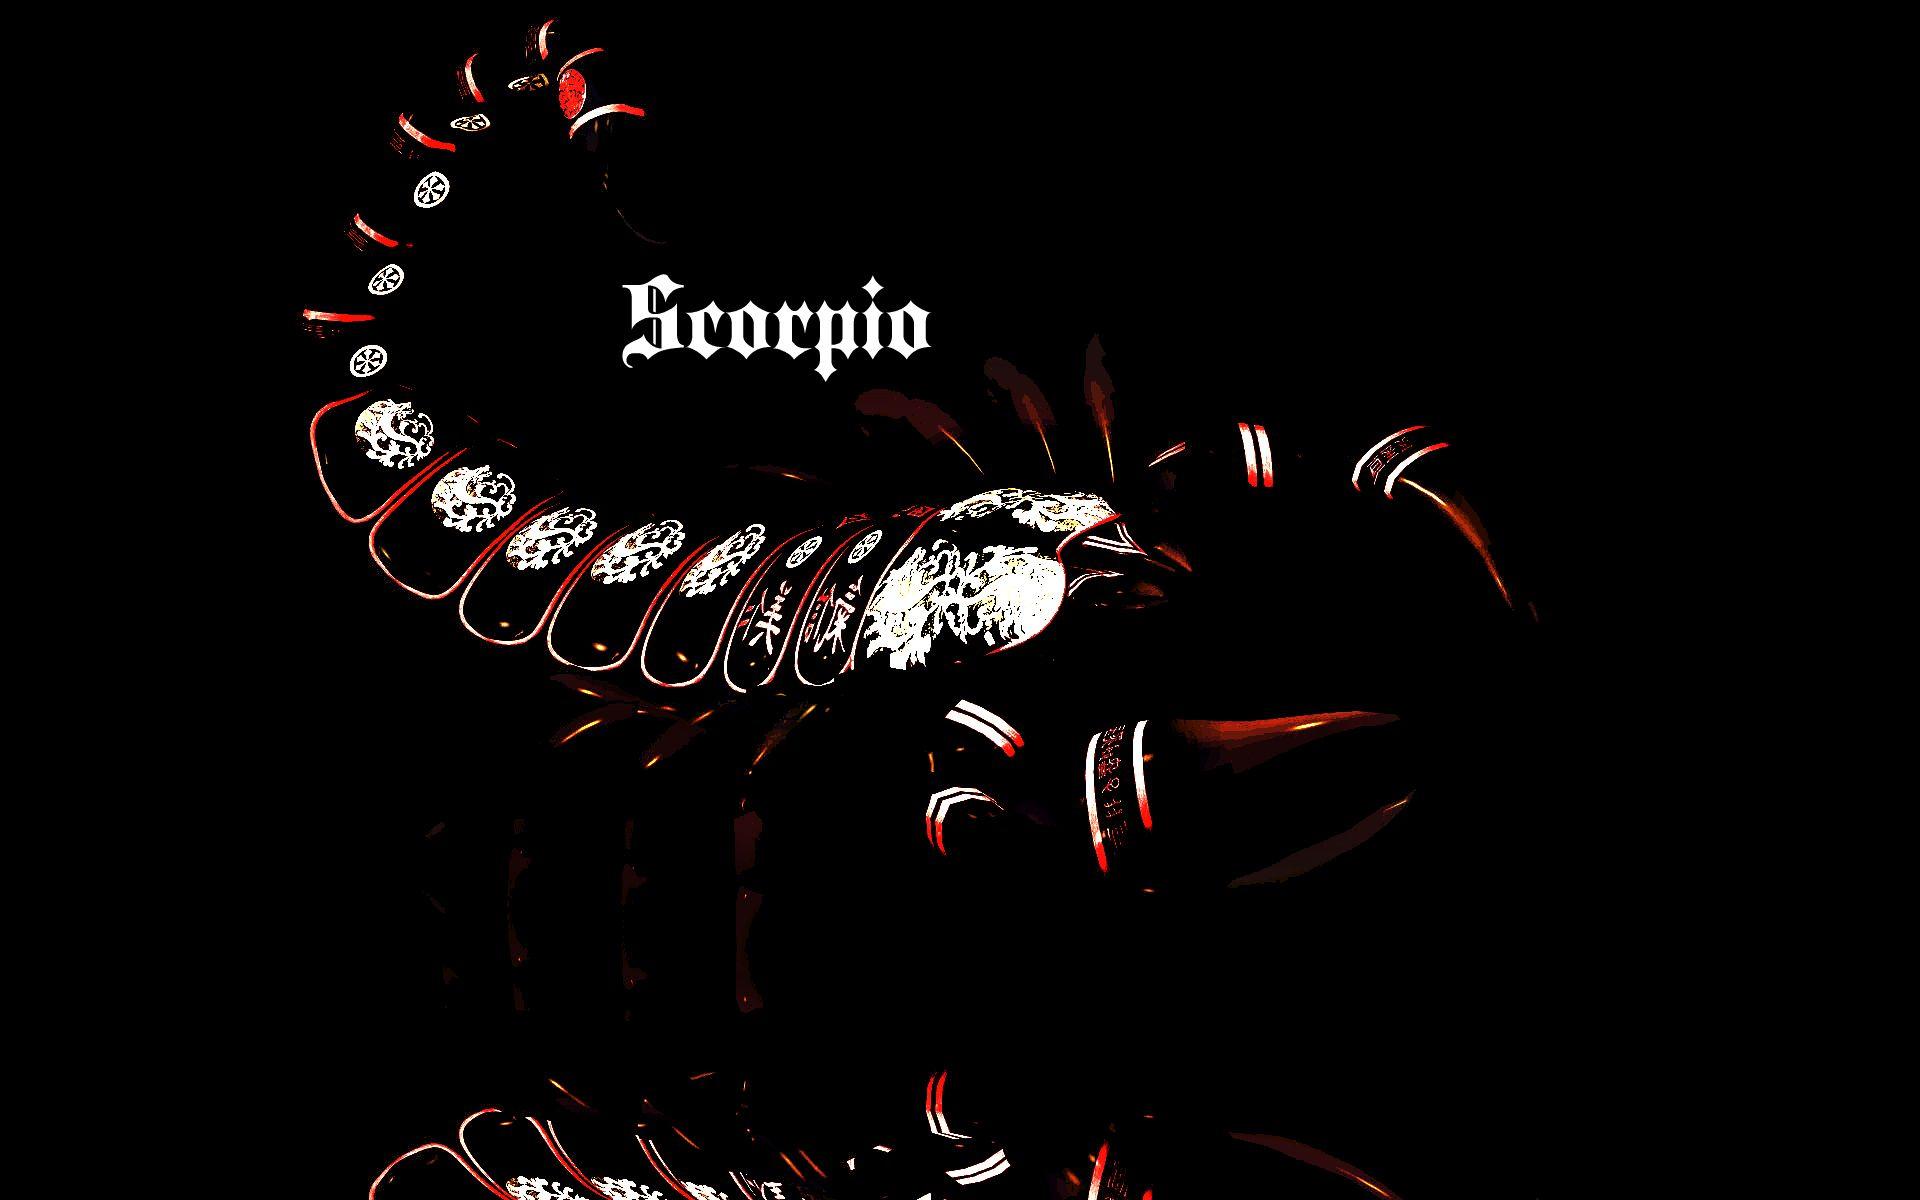 Scorpion design Image Wallpaper. Beautiful image HD Picture